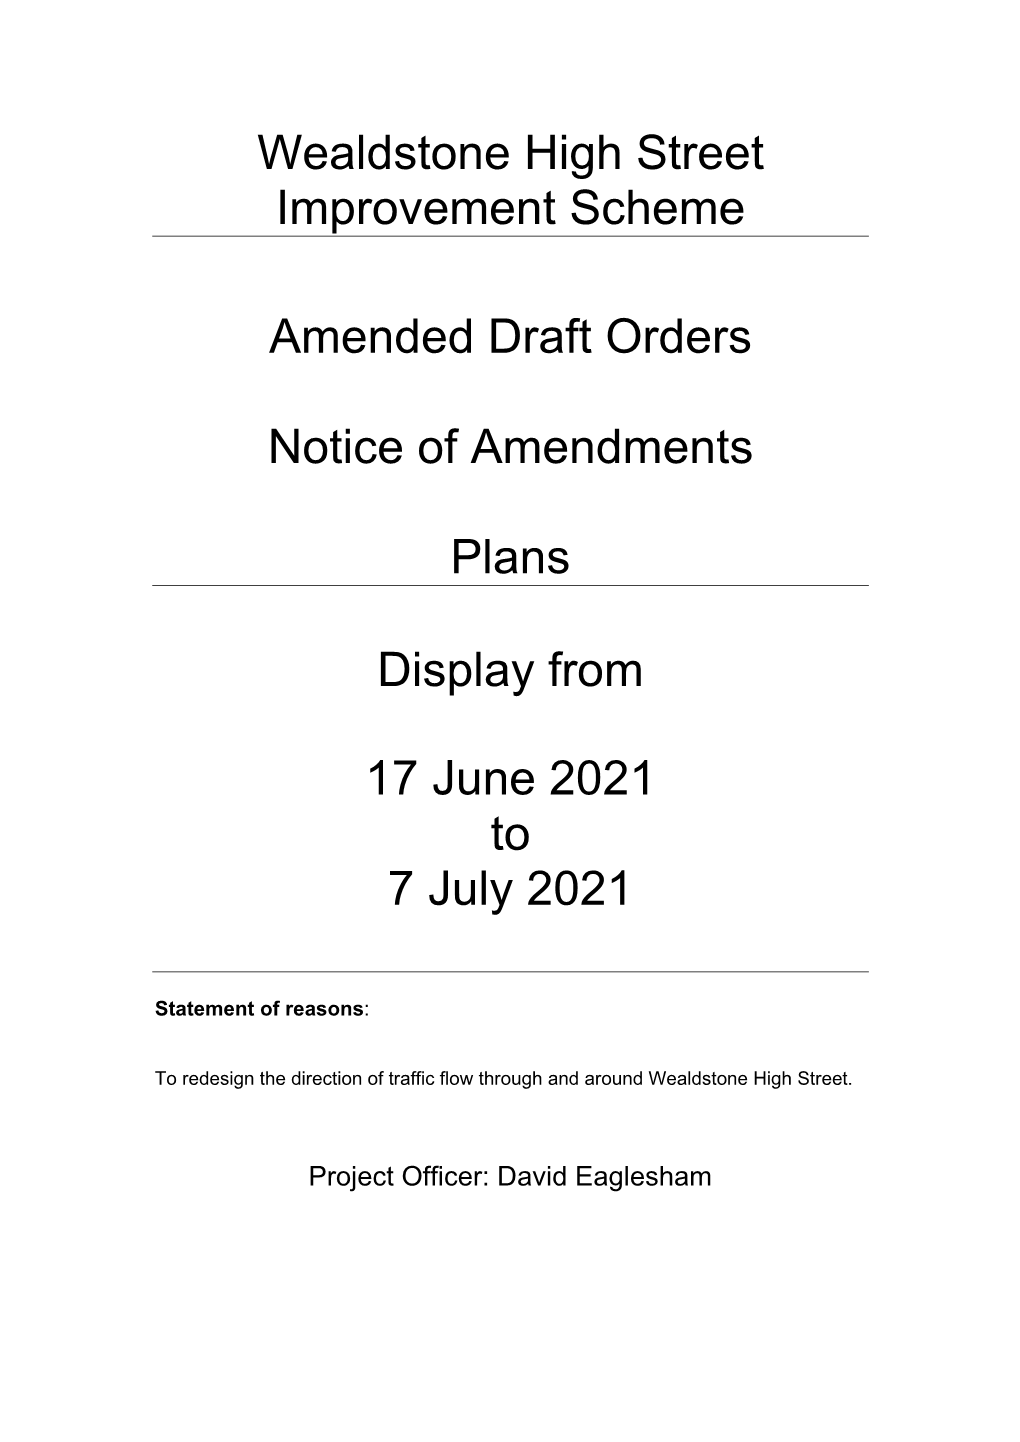 Wealdstone High Street Improvement Scheme Amended Draft Orders